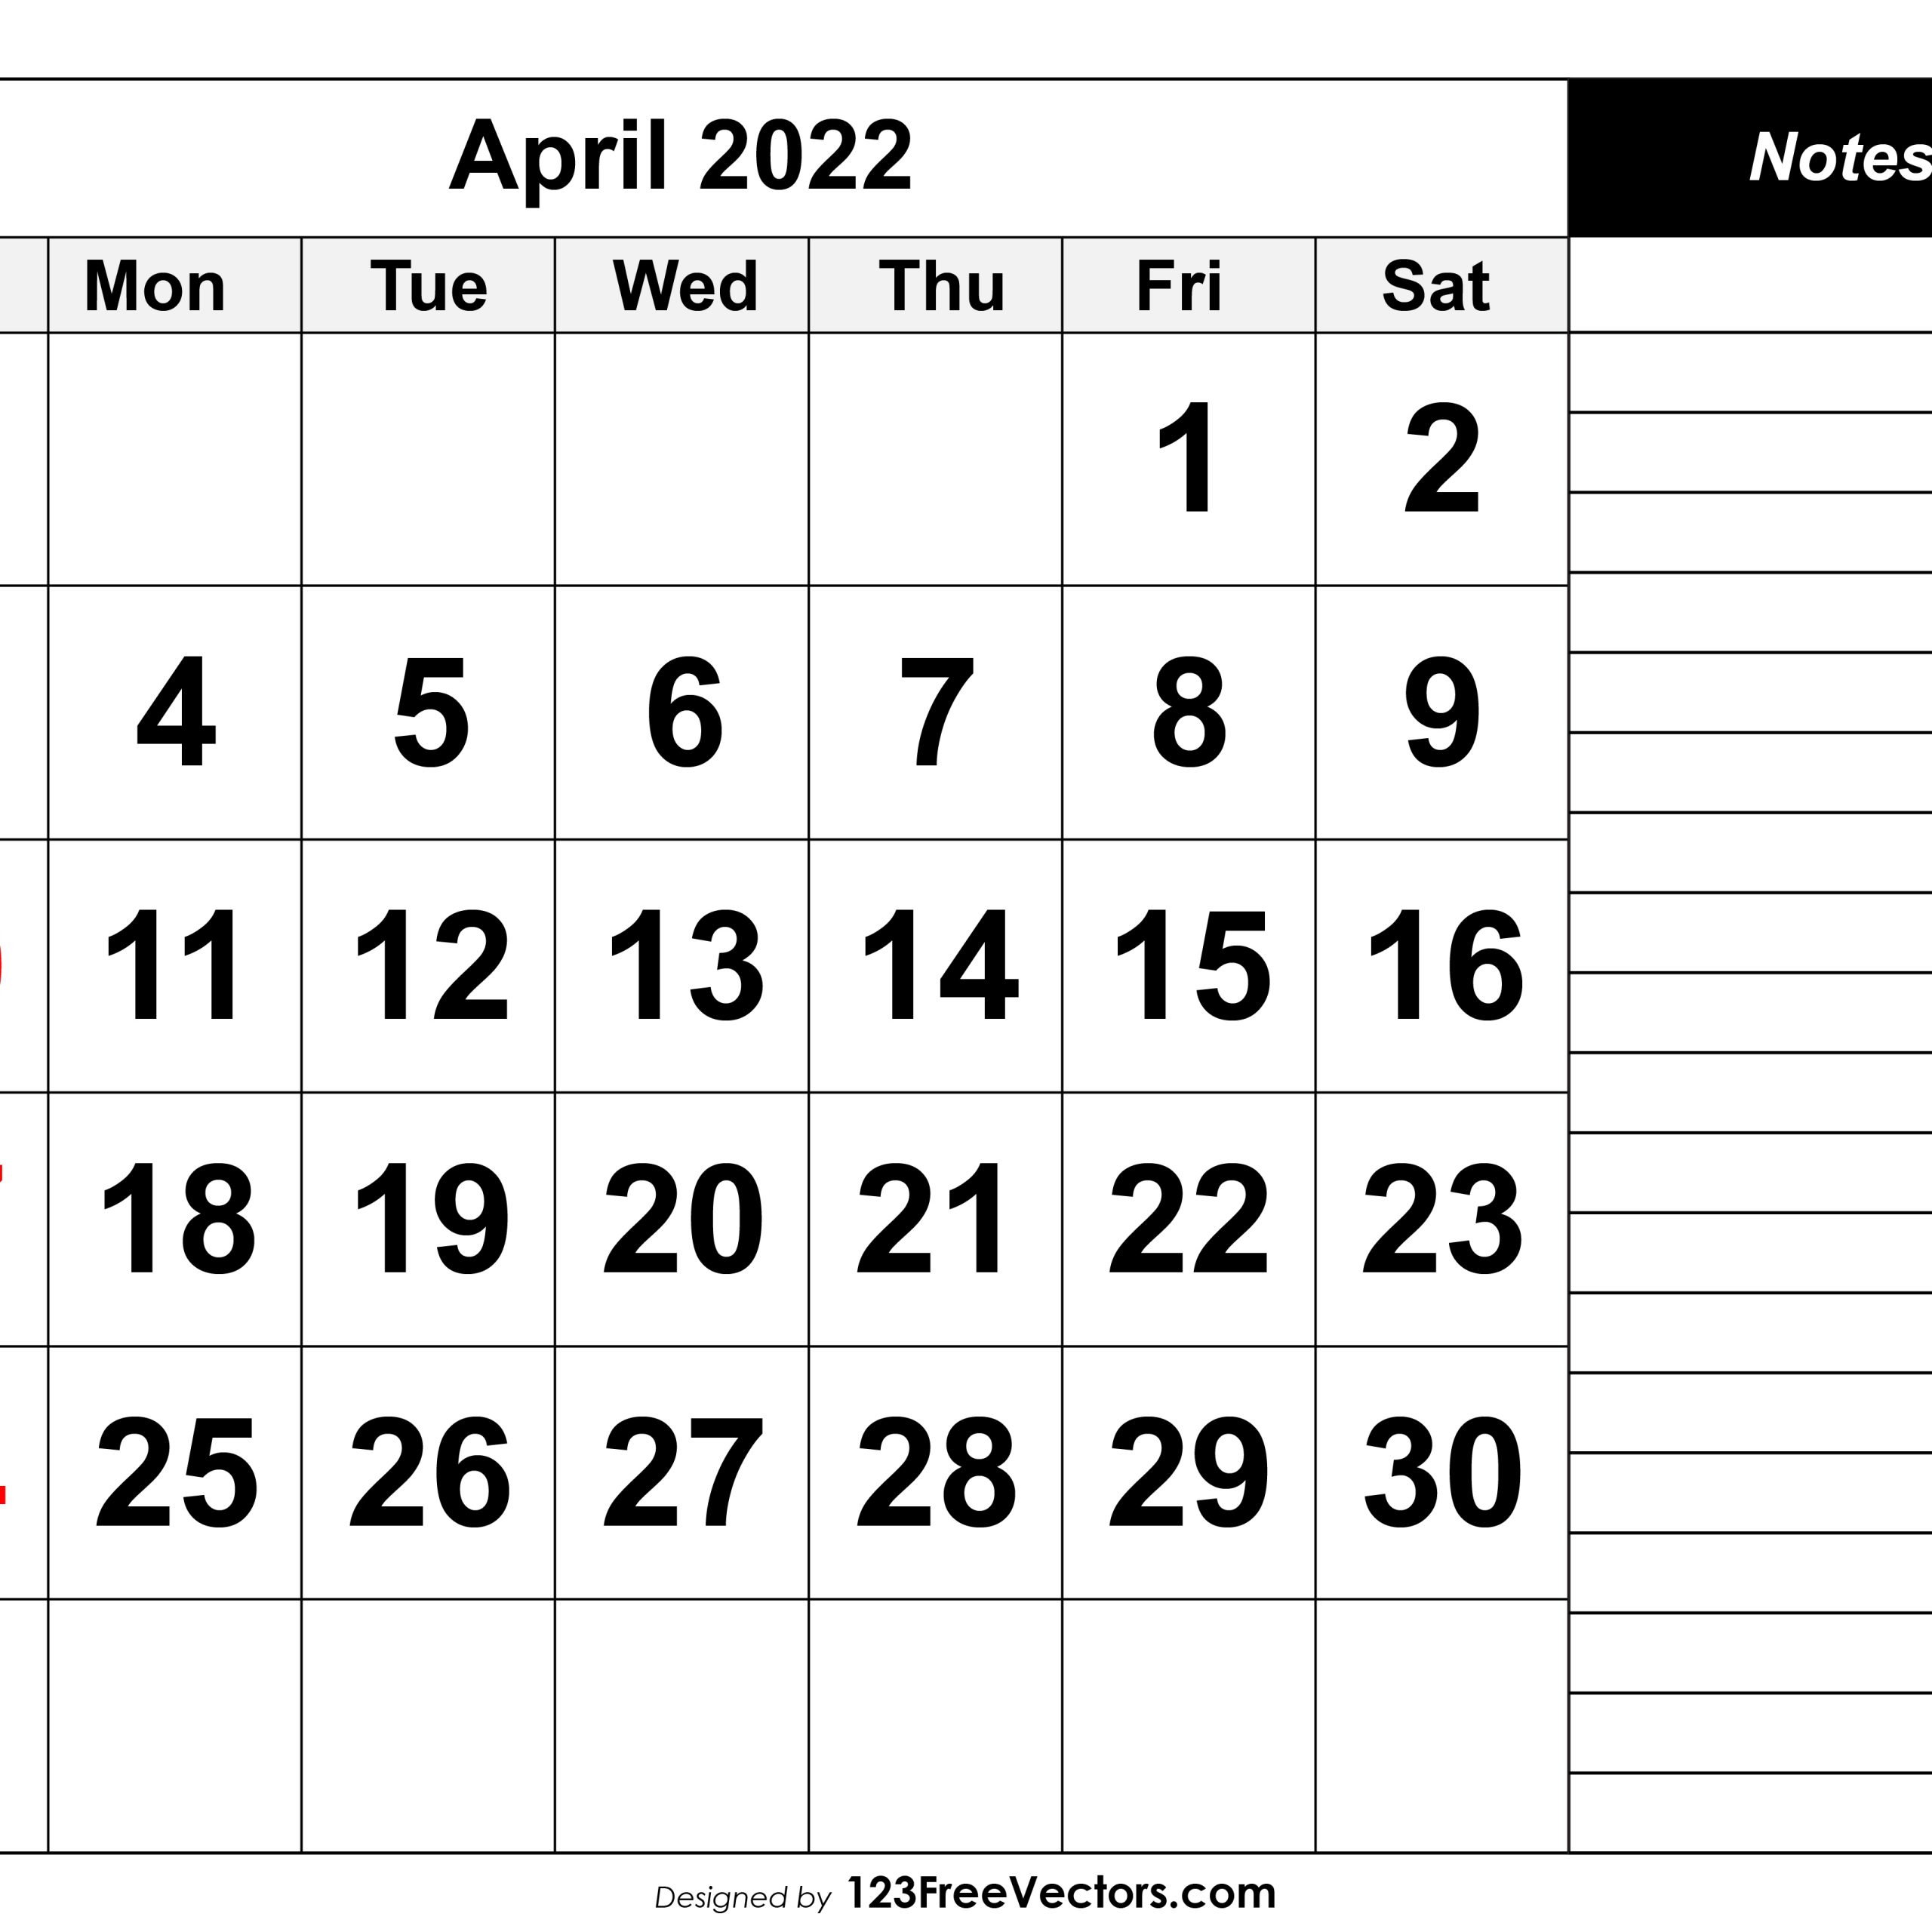 April 2022 Printable Calendar